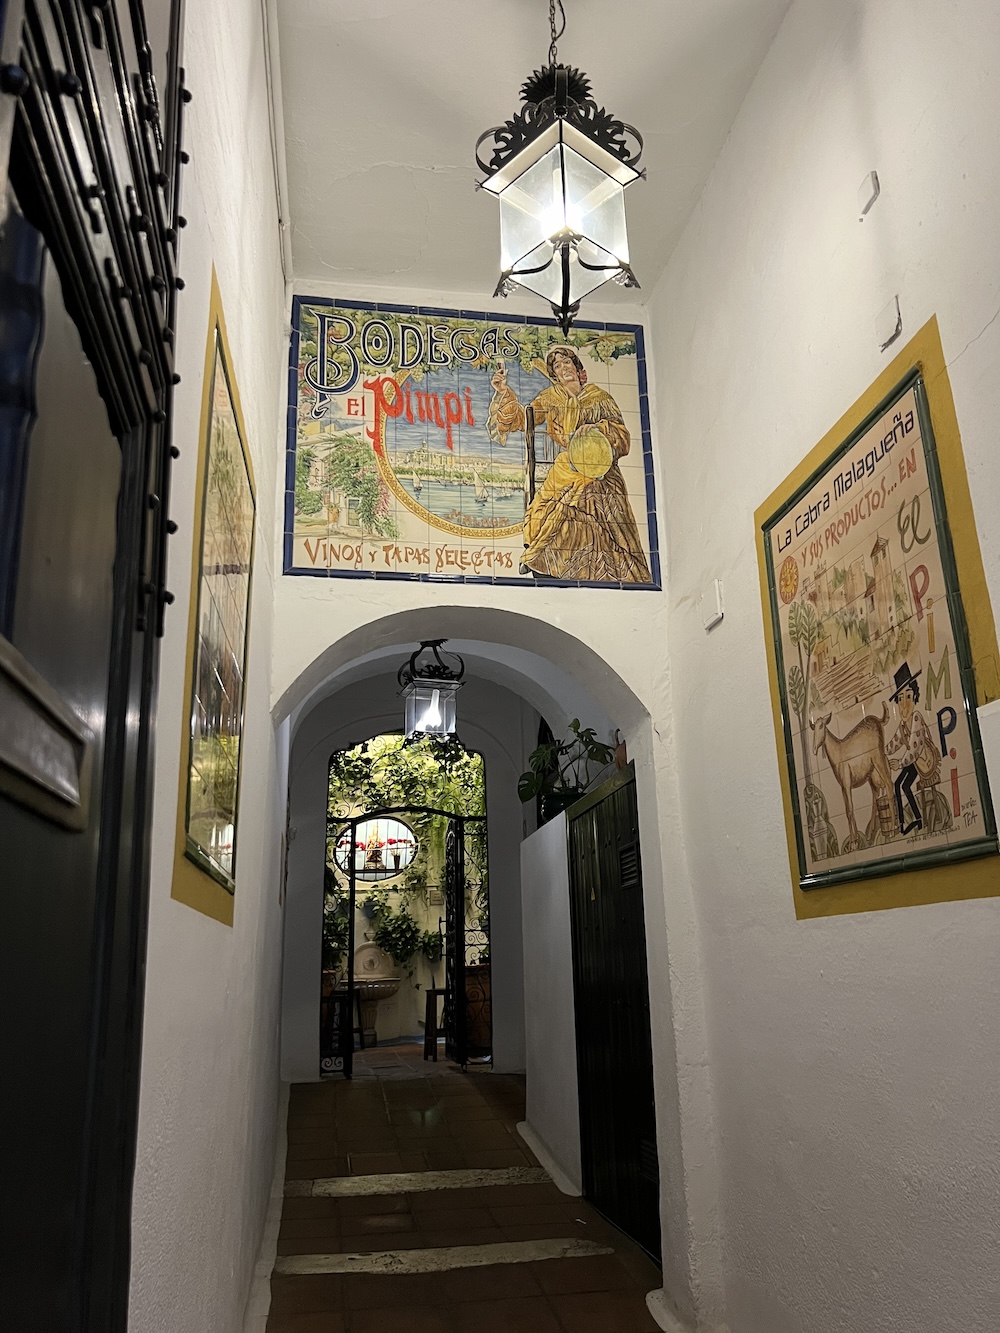 The entrance hall at El Pimpi, Malaga's most famous bodega